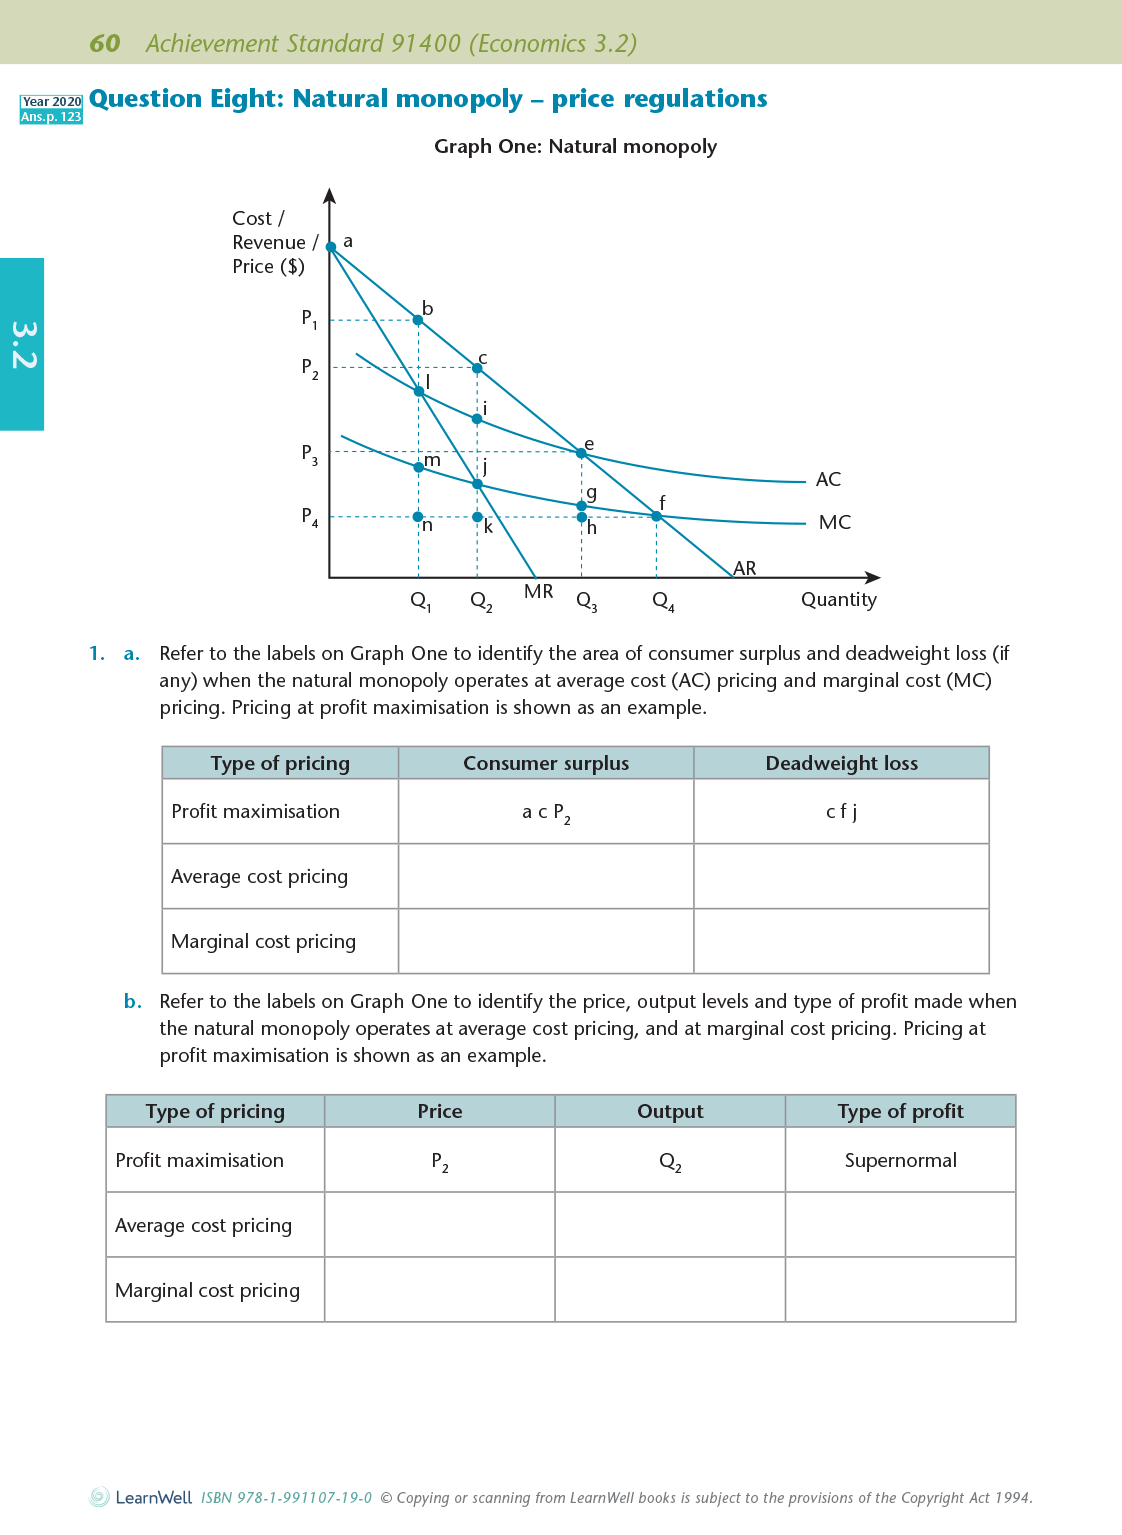 Level 3 Economics AME Workbook